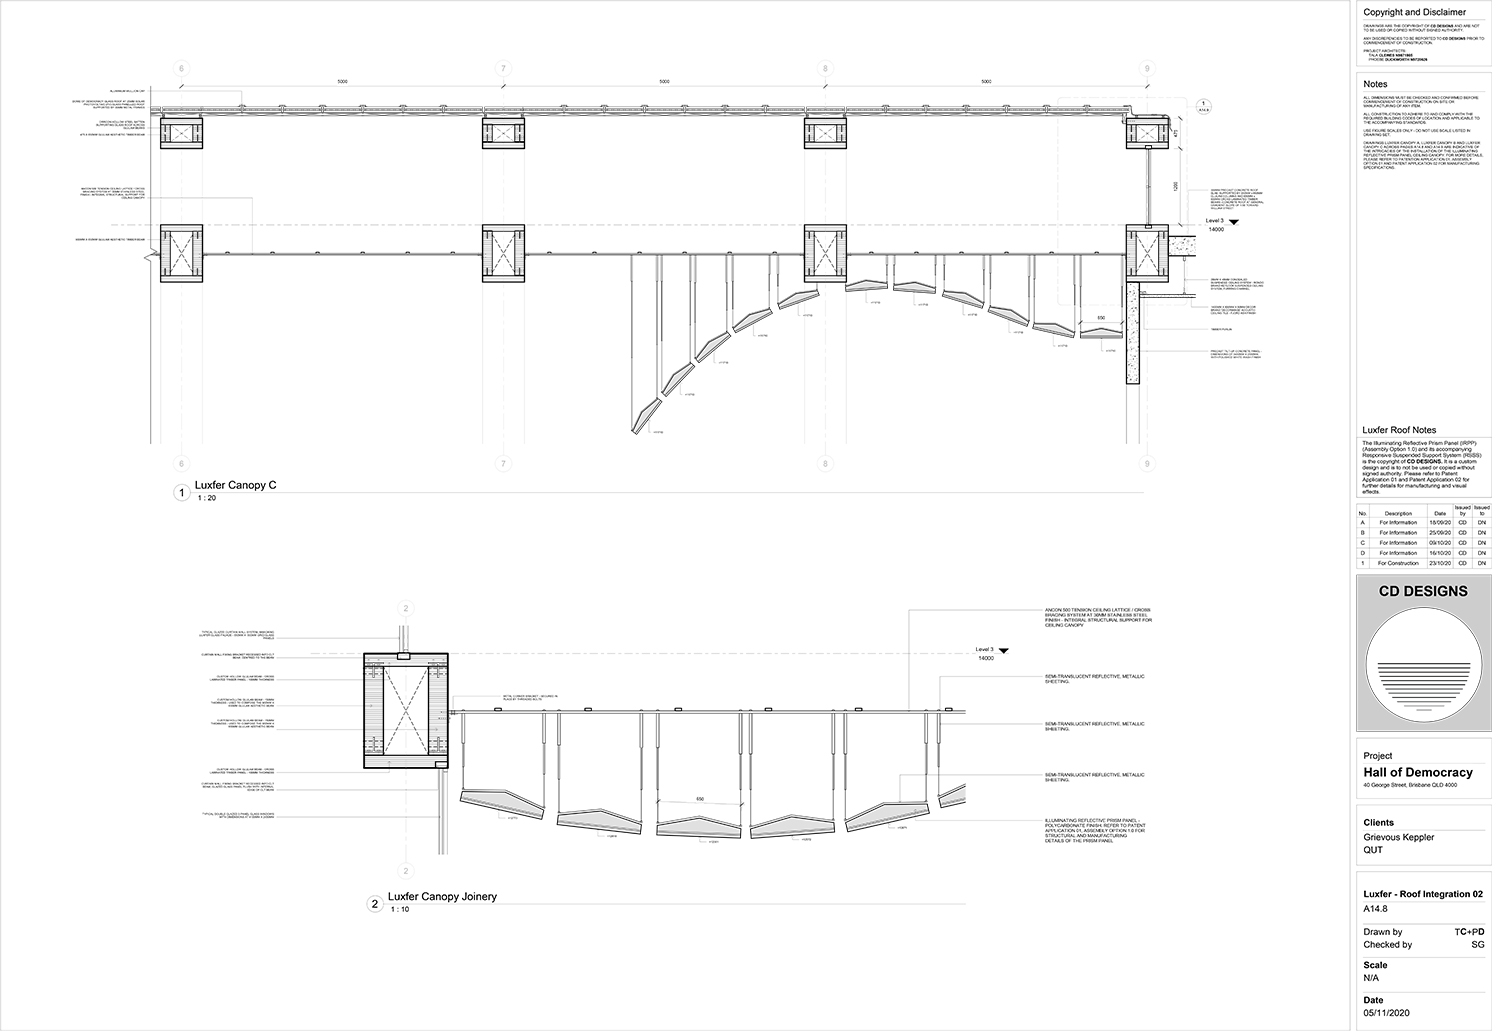 Technical documentation detail - roof integration. 